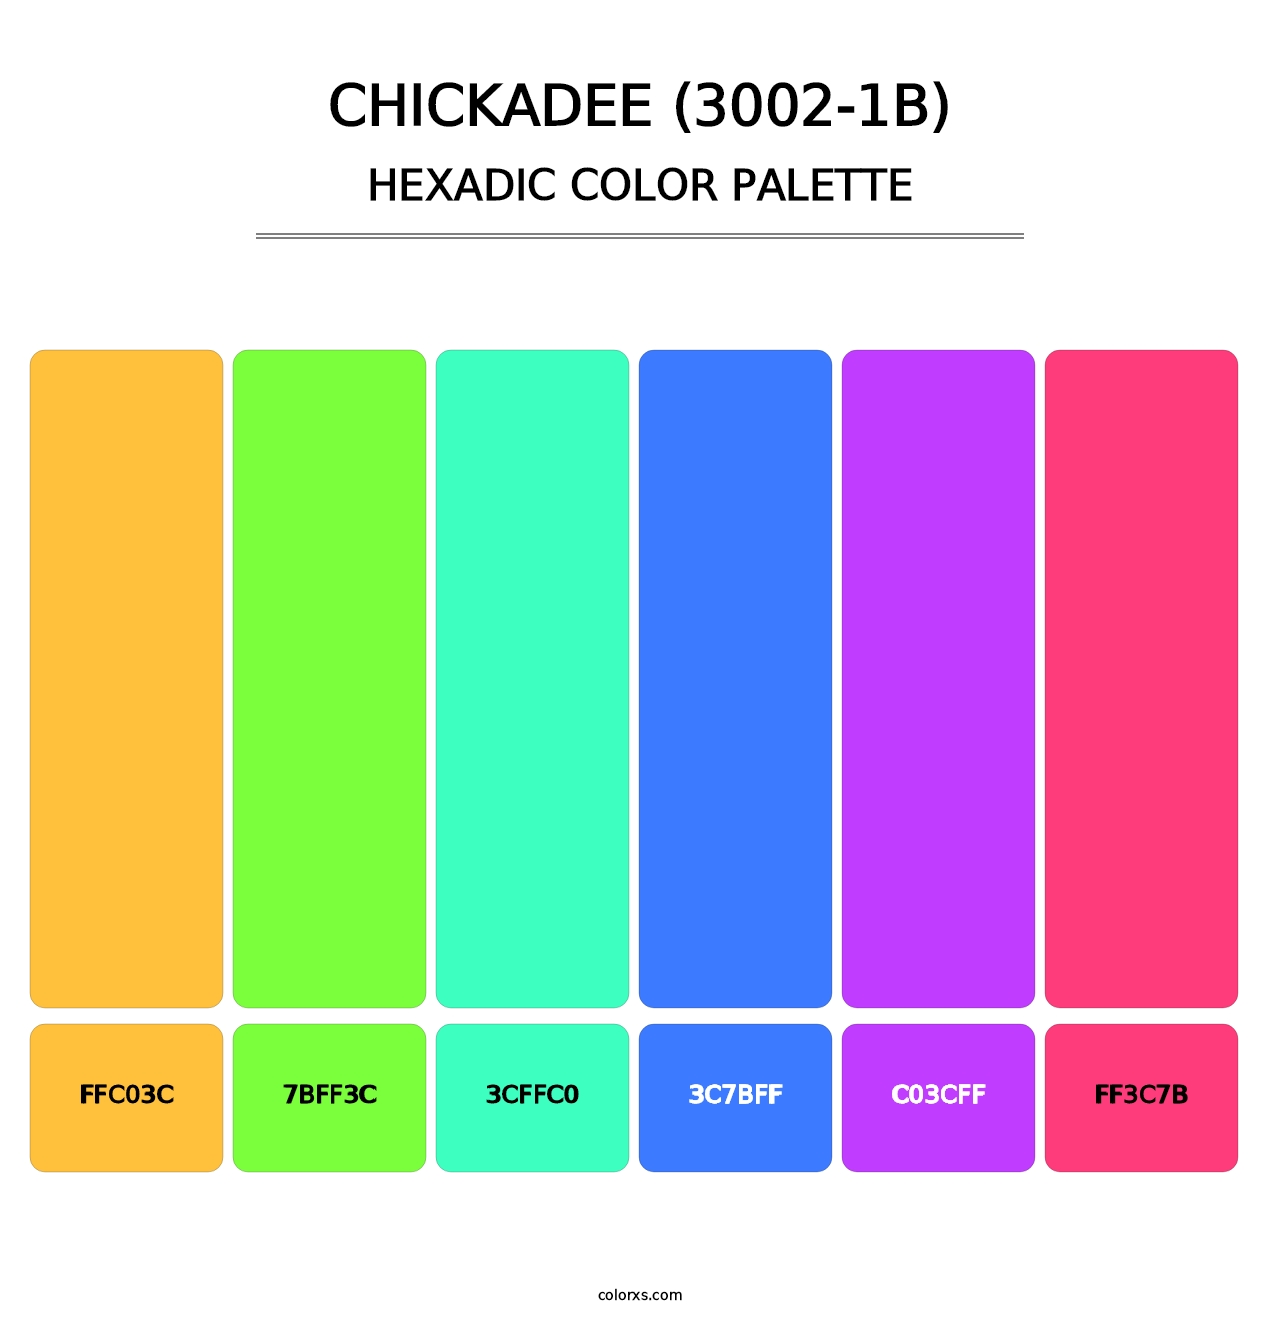 Chickadee (3002-1B) - Hexadic Color Palette